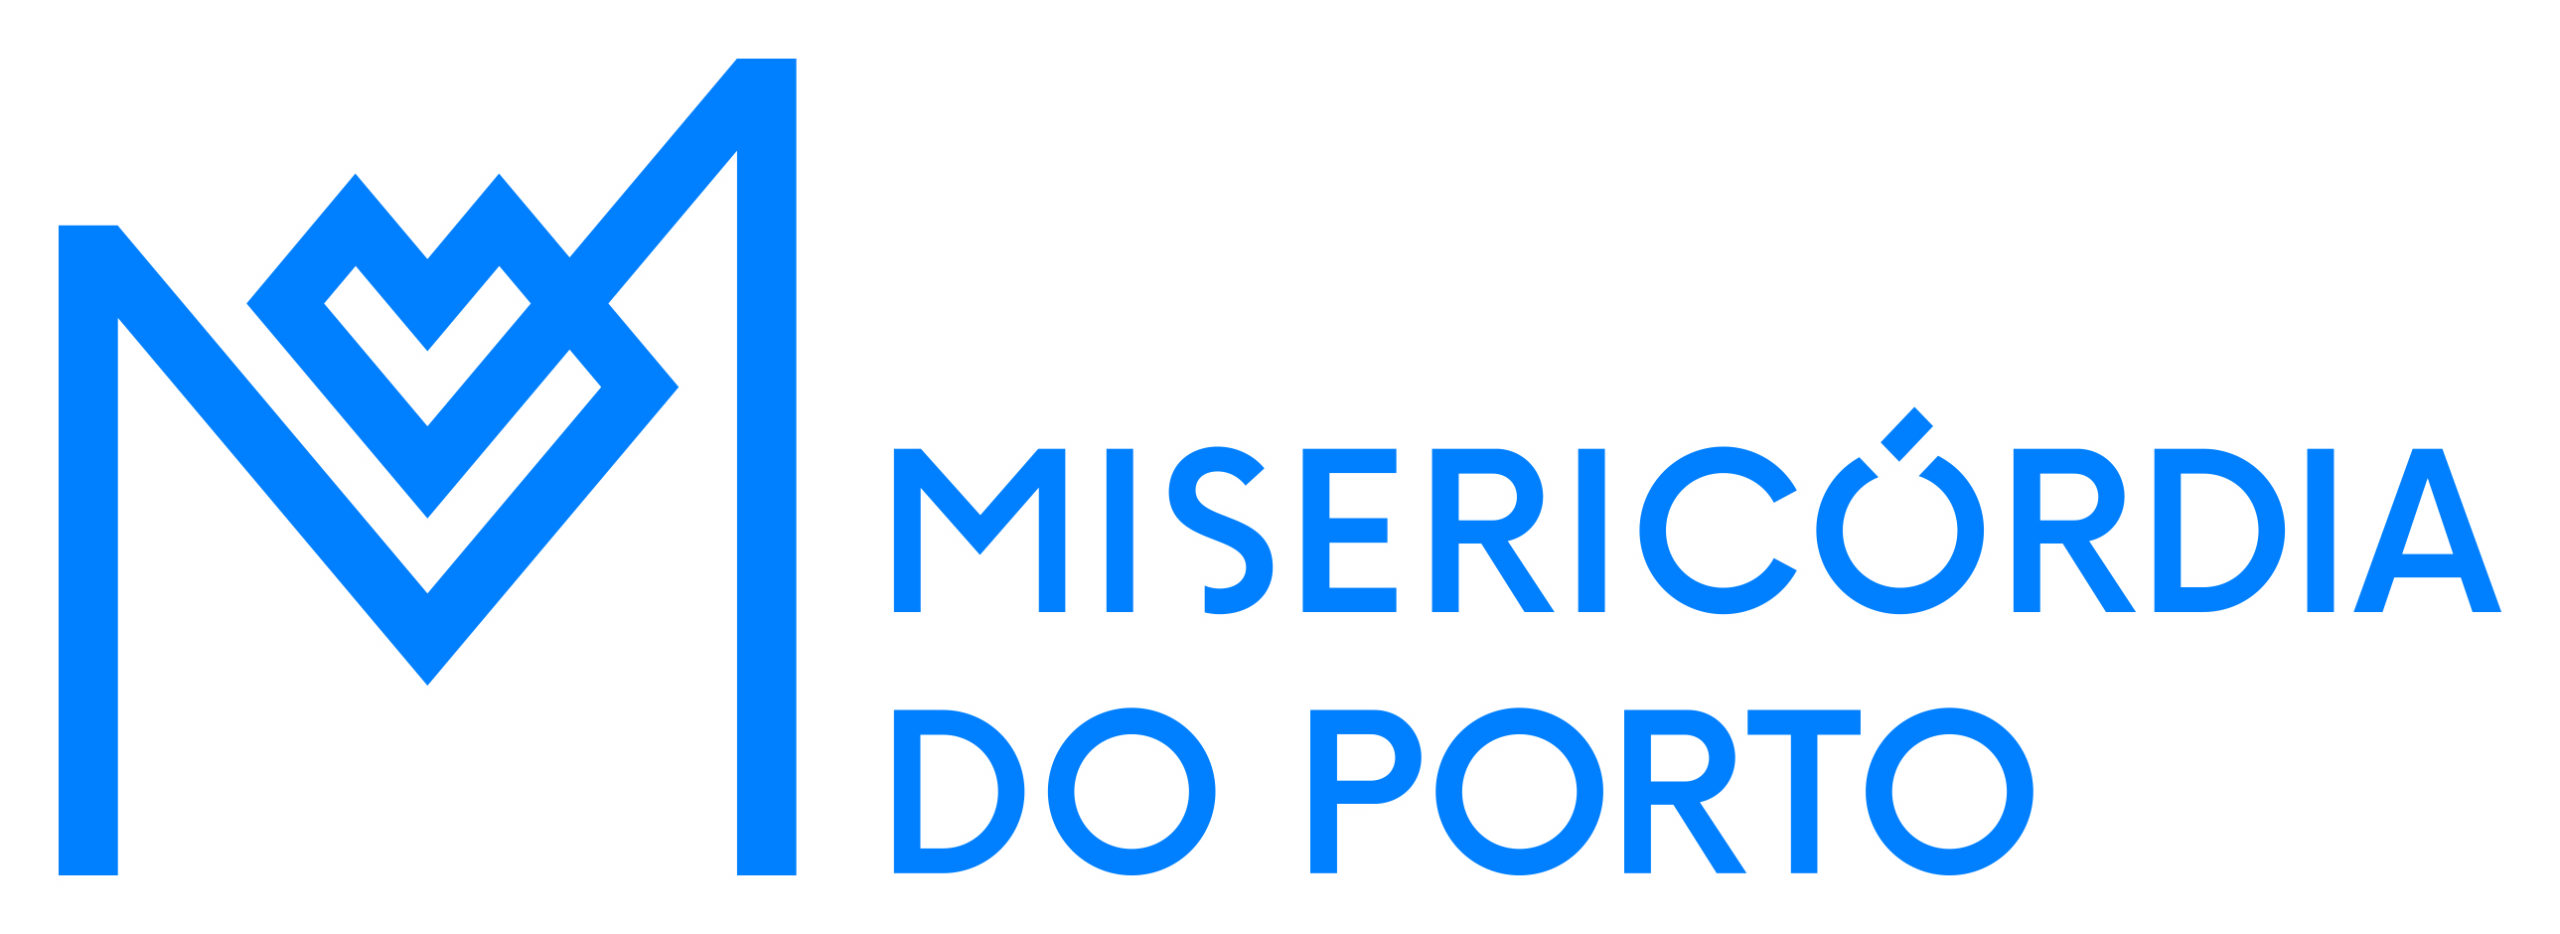 Misericordia Porto